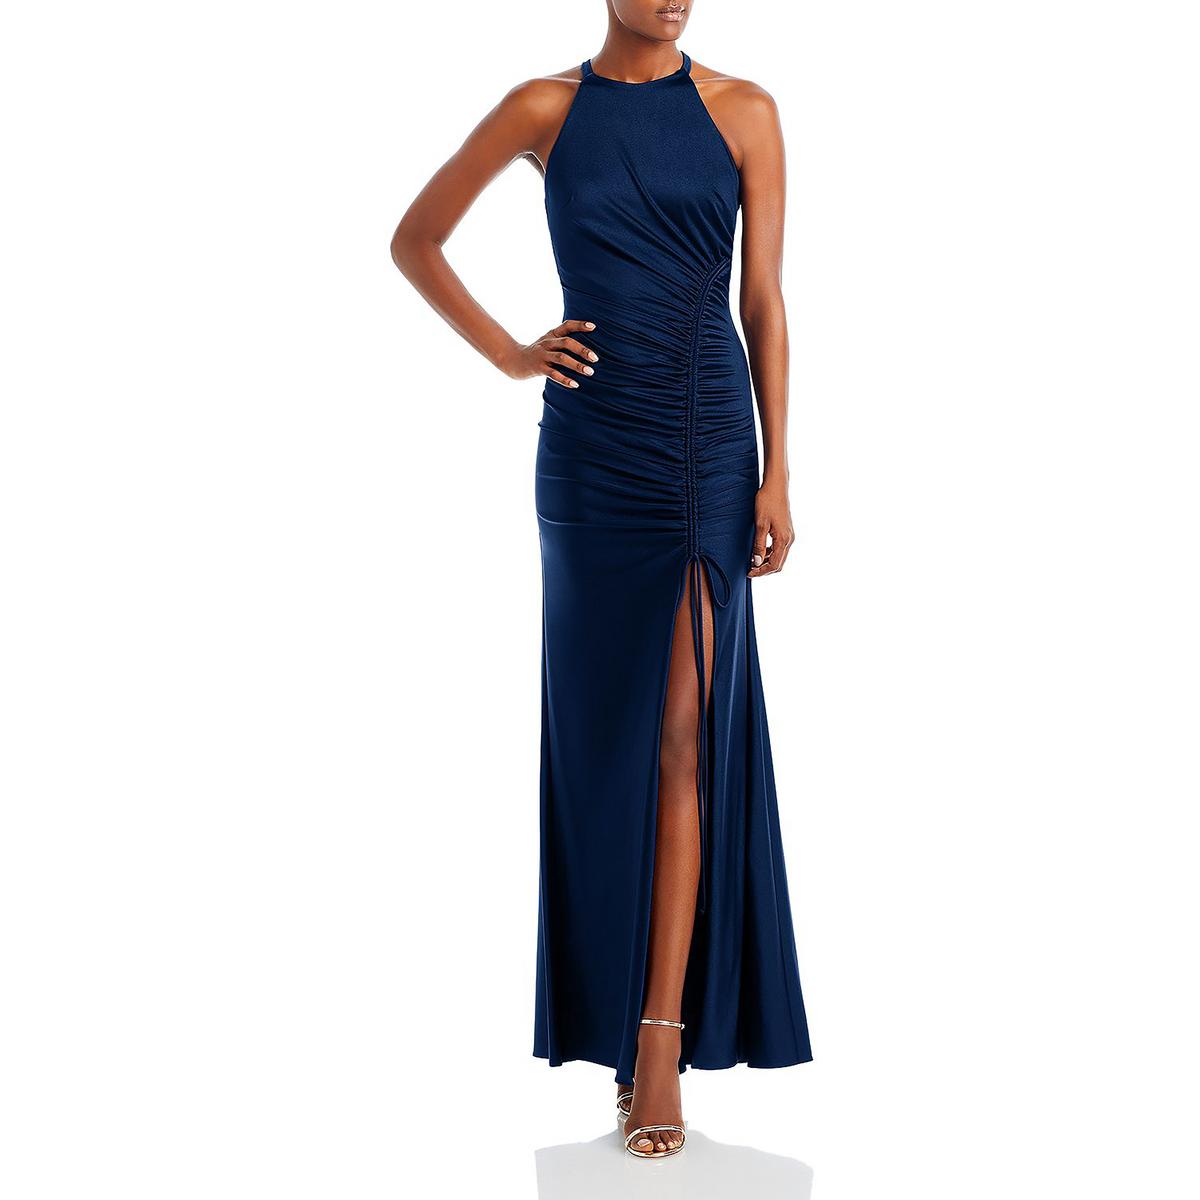 Aqua Womens Ruched Halter Evening Dress Gown BHFO 3805